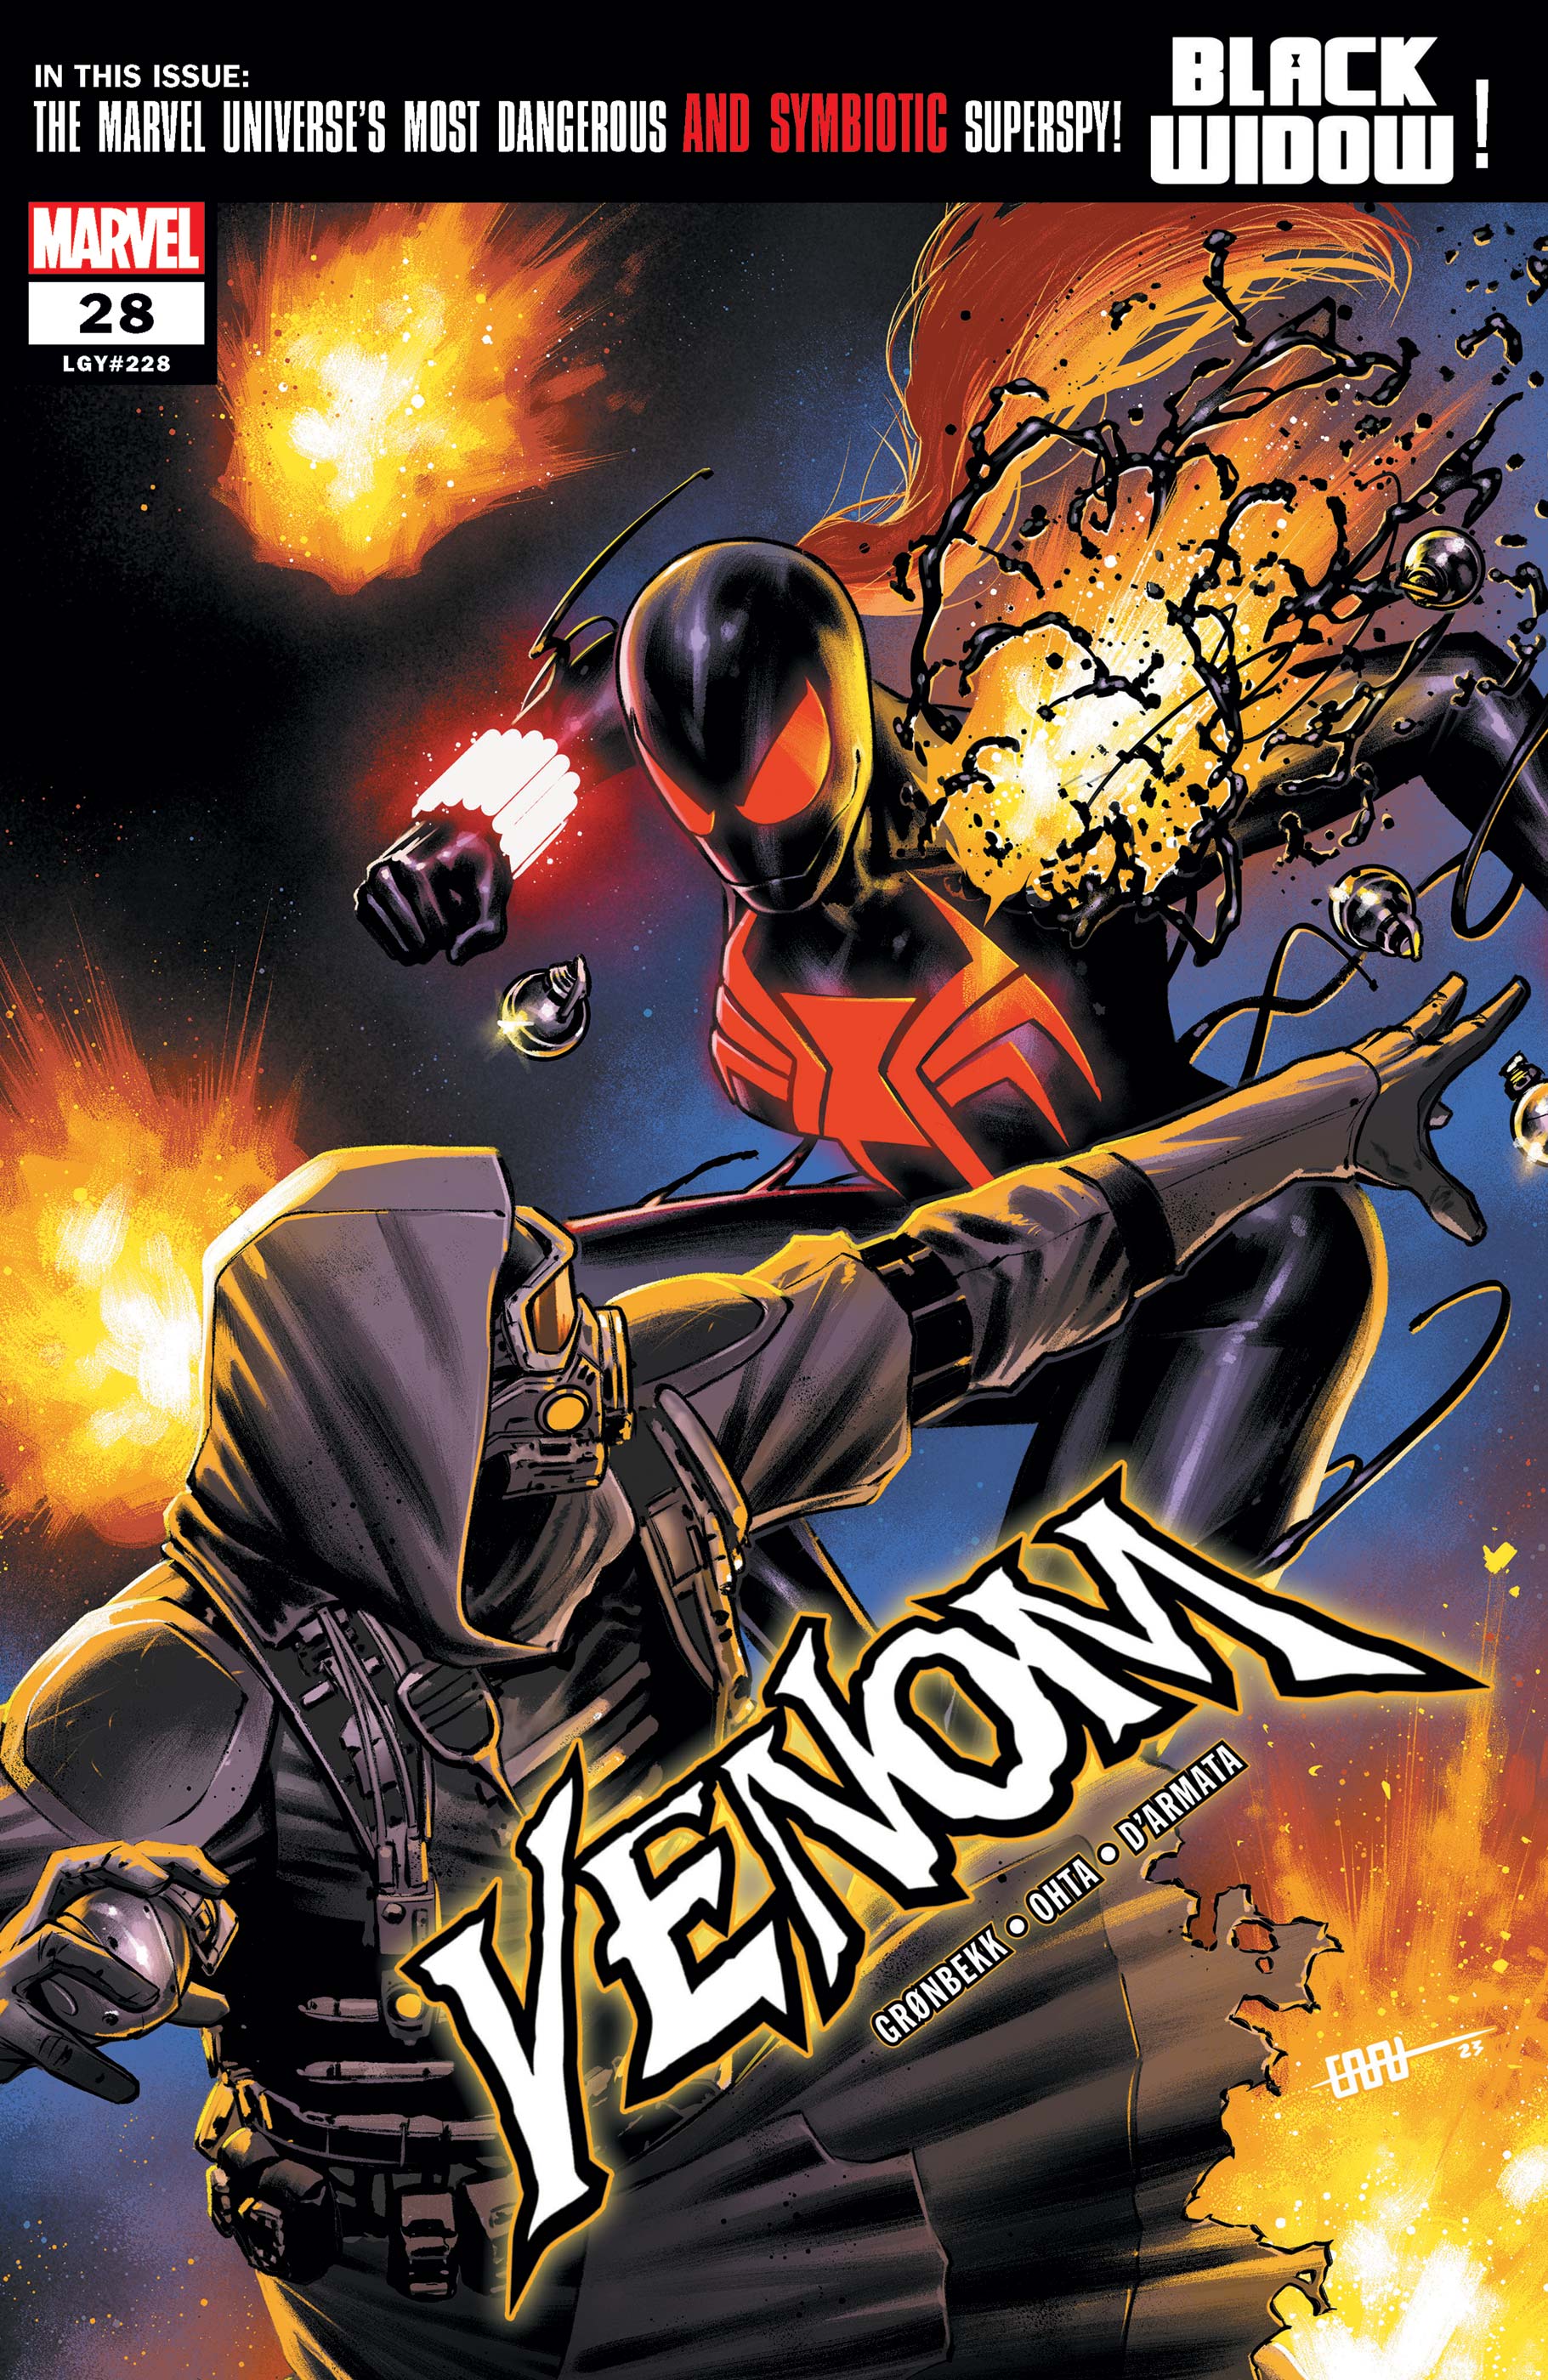 Venom (2021) #28